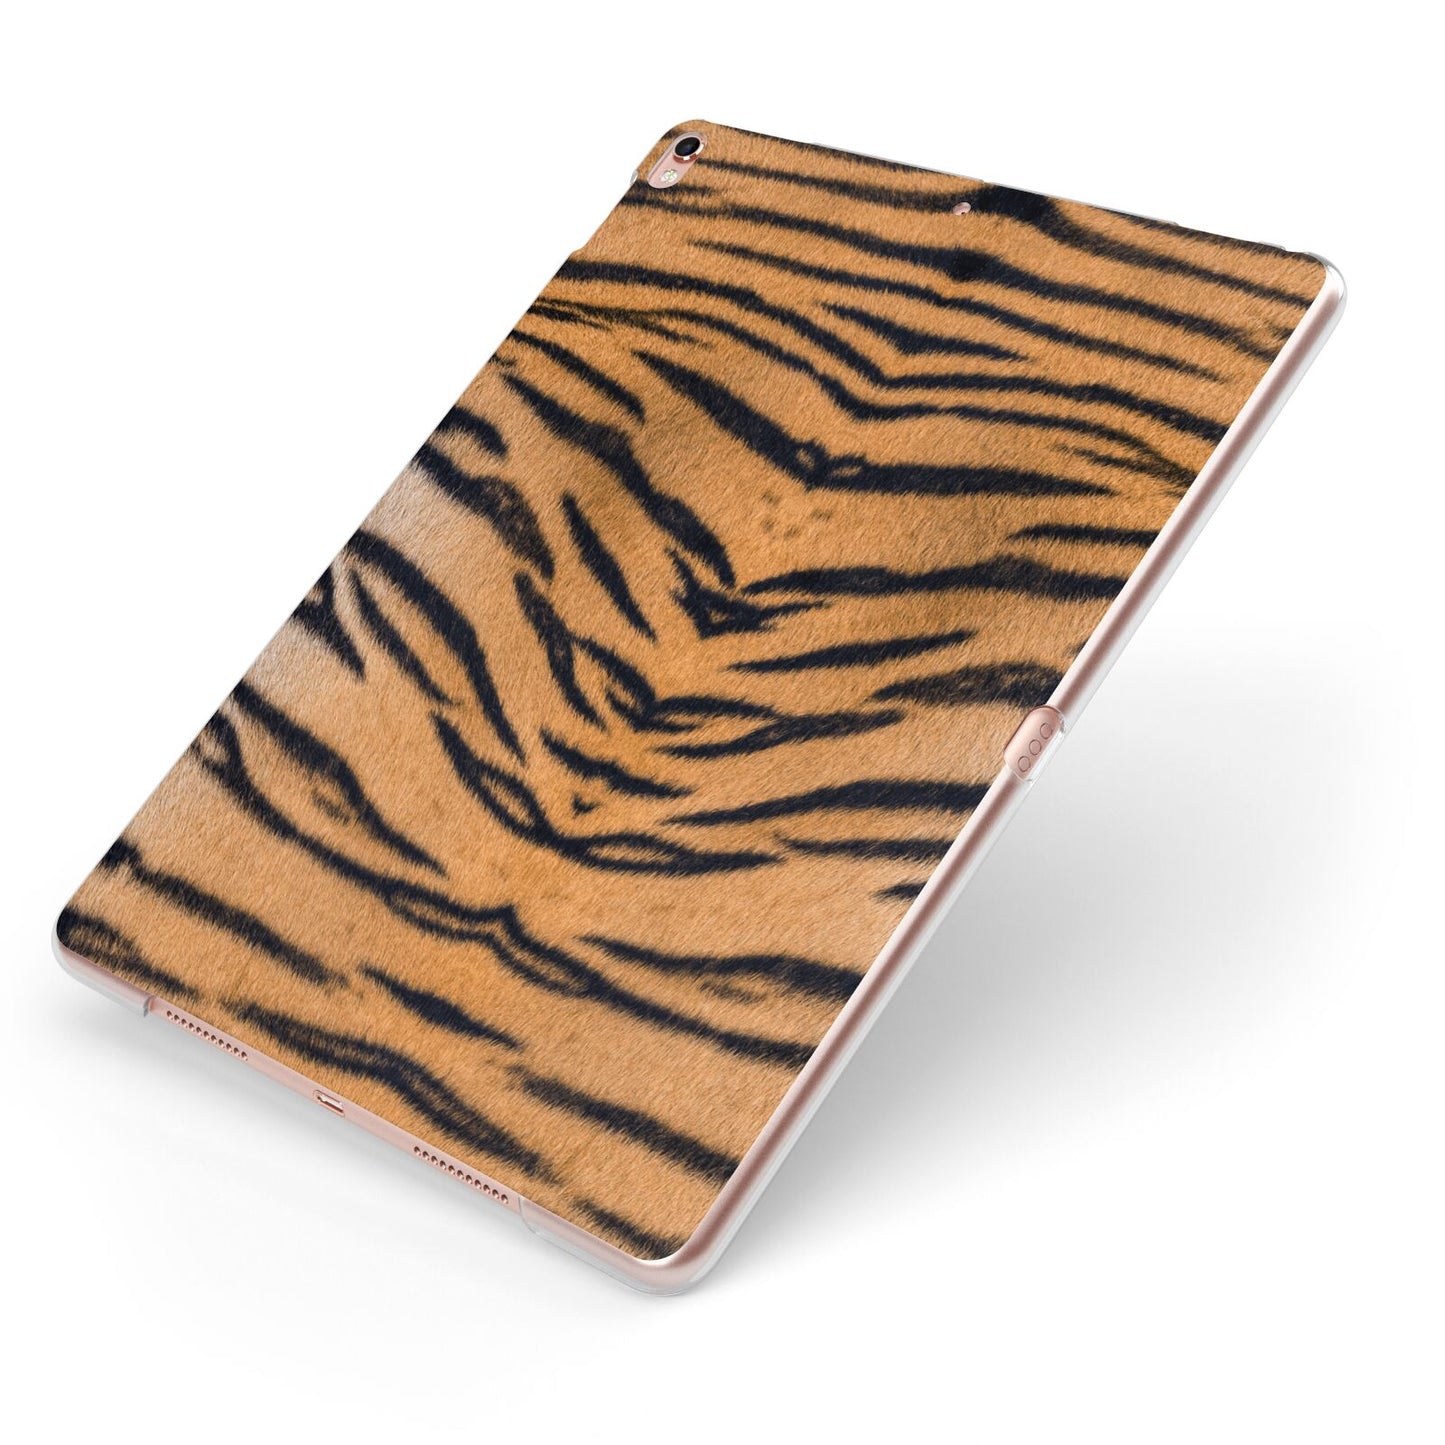 Tiger Print Apple iPad Case on Rose Gold iPad Side View